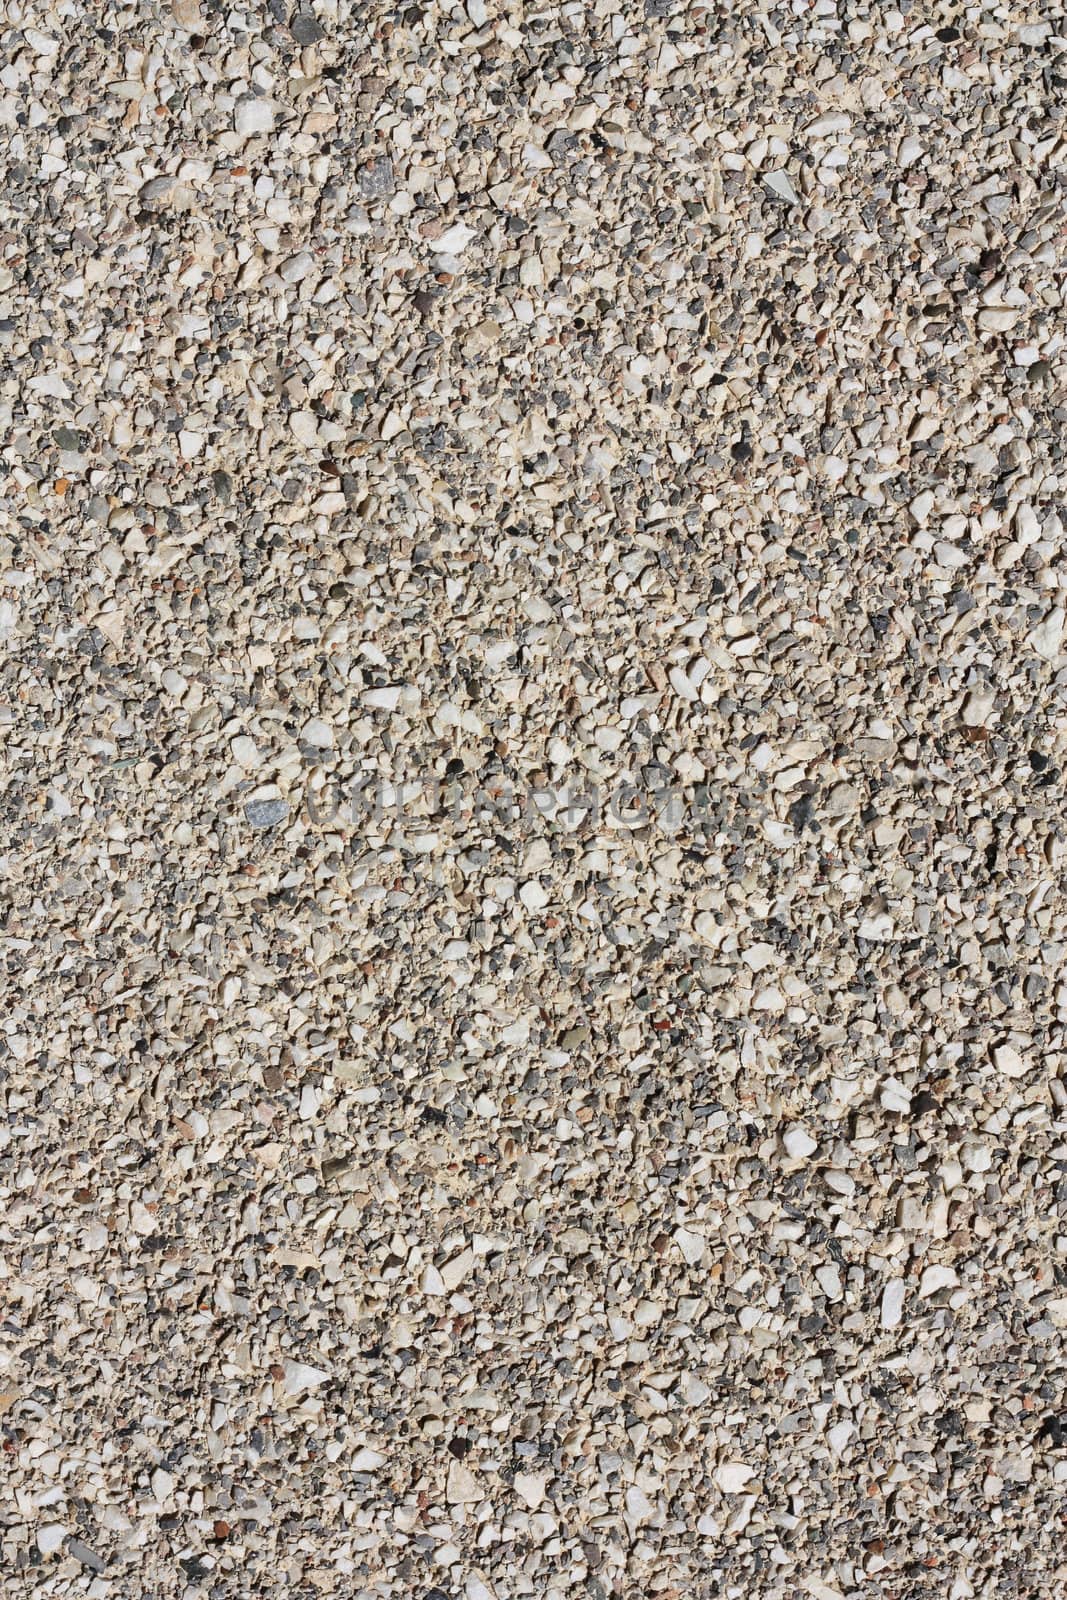 pebbles texture